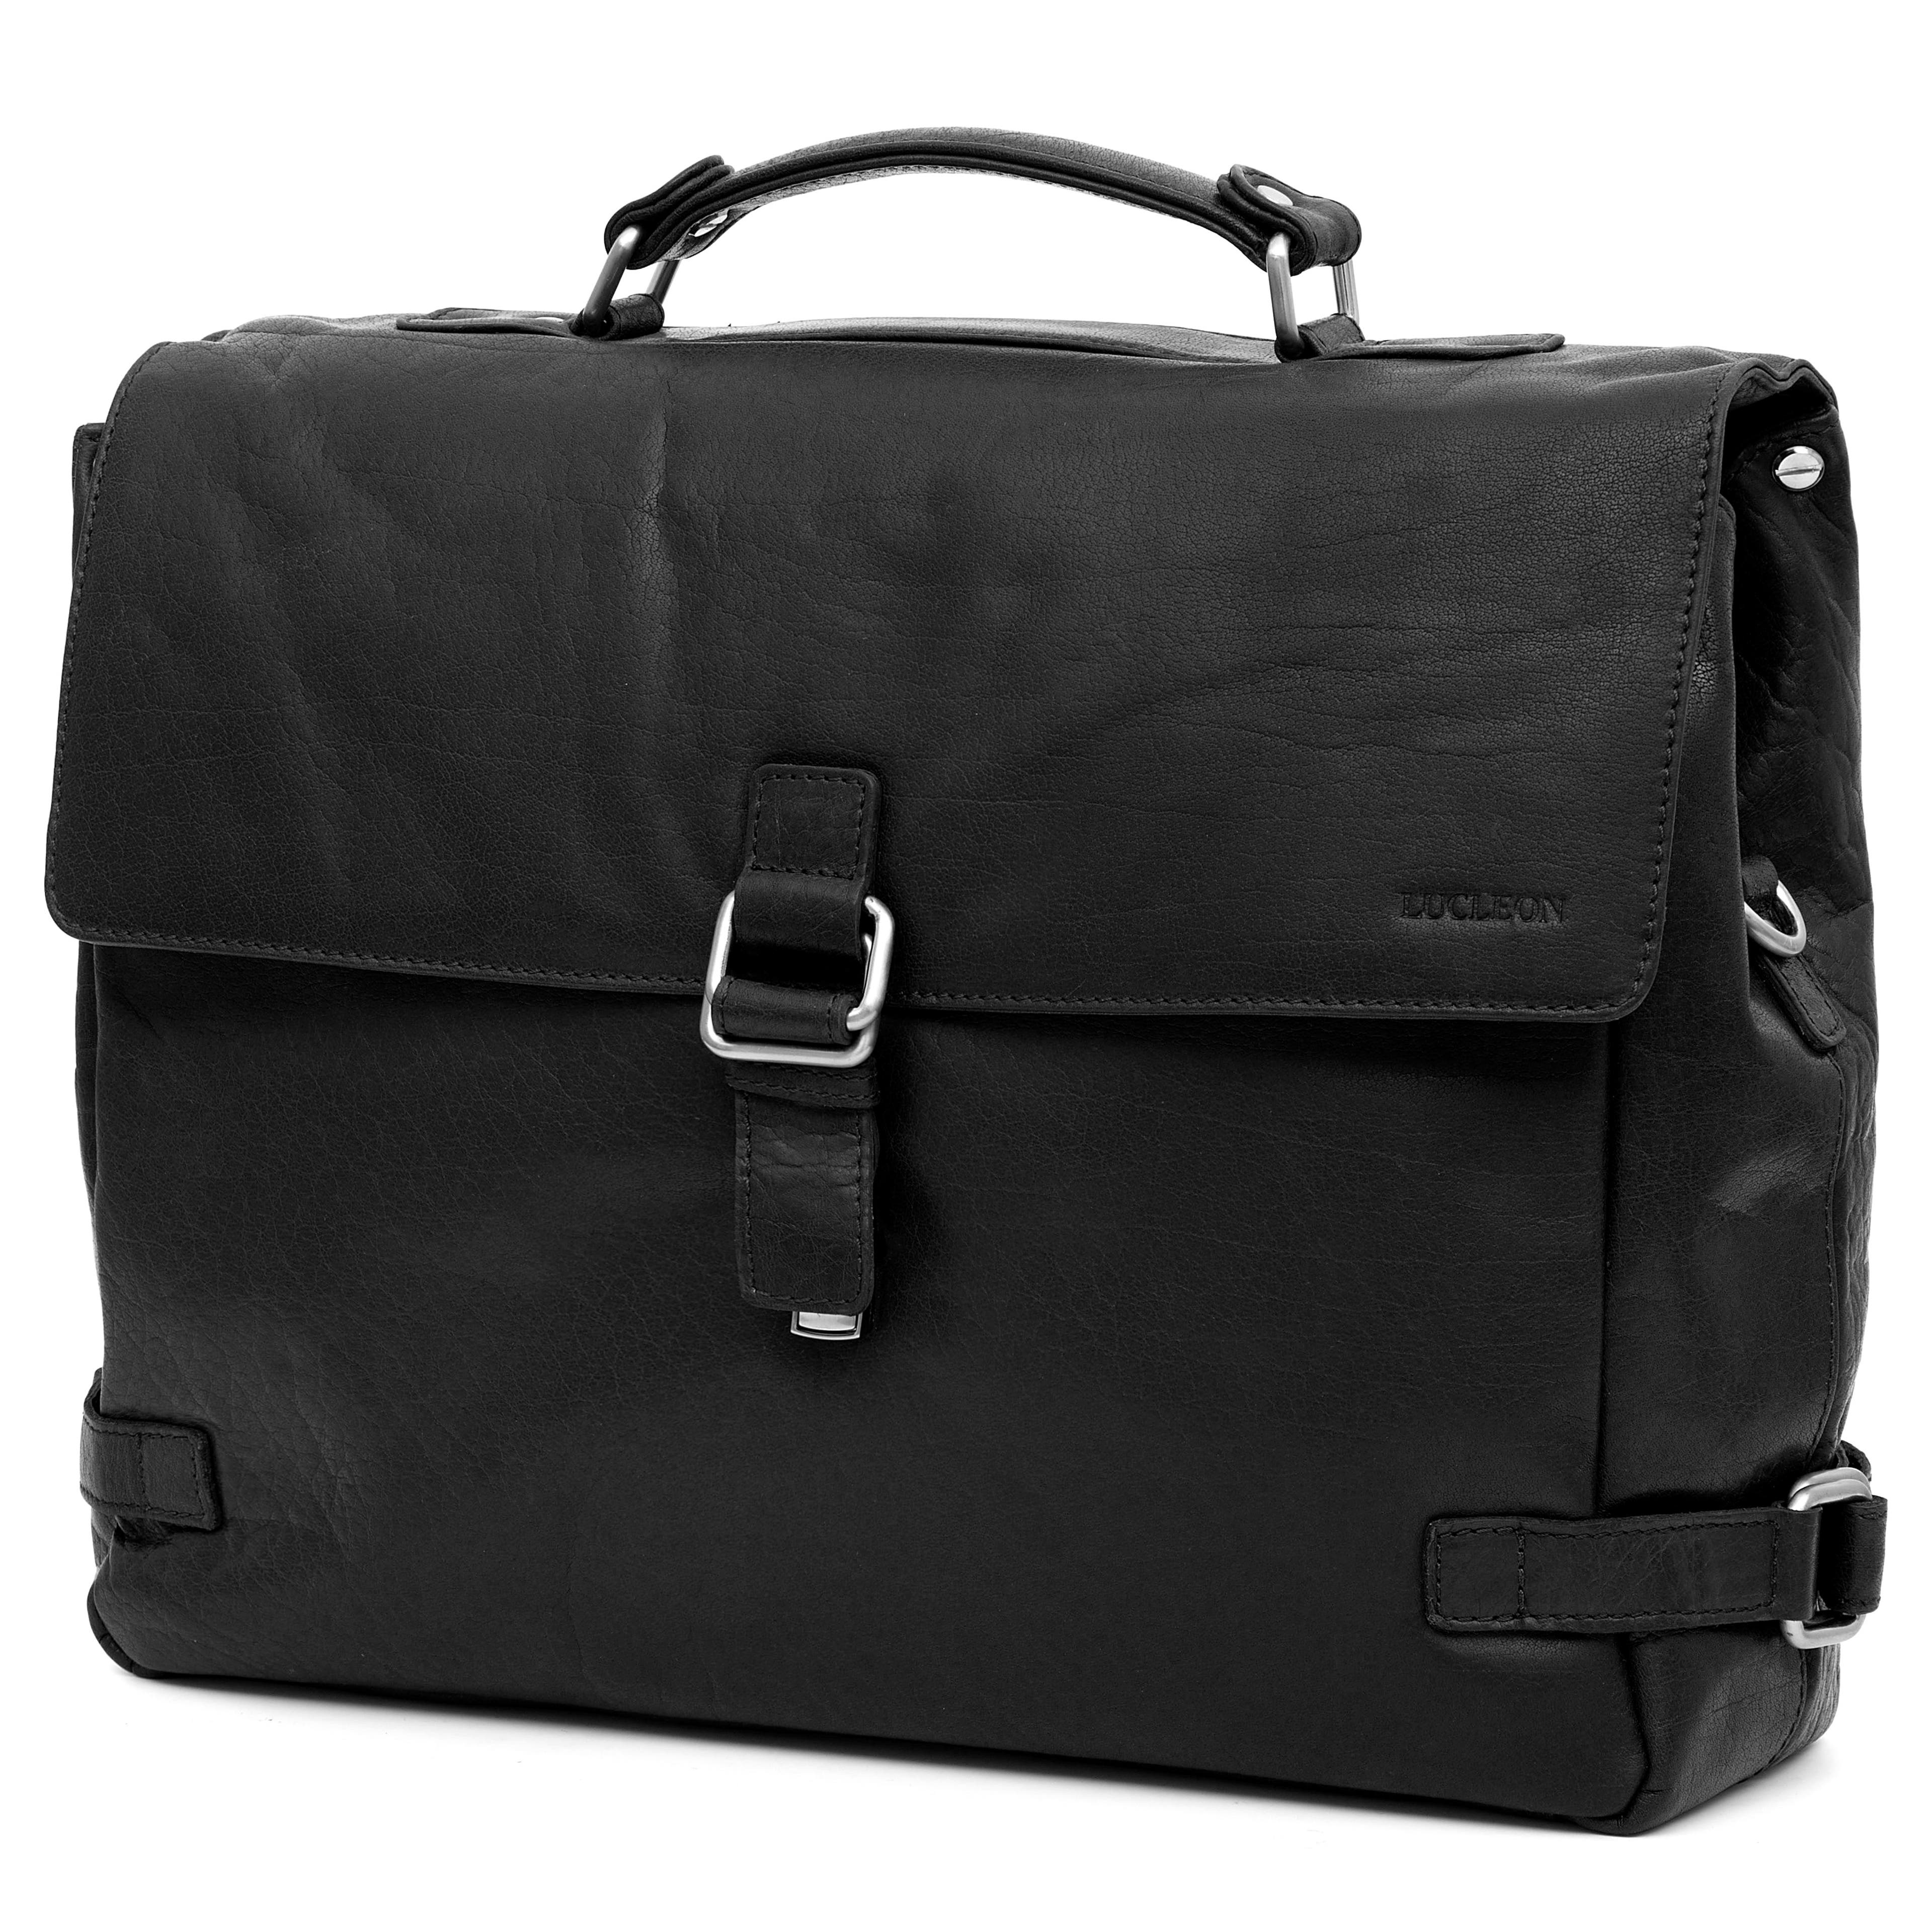 Montreal Luxury Leather Black Satchel Bag